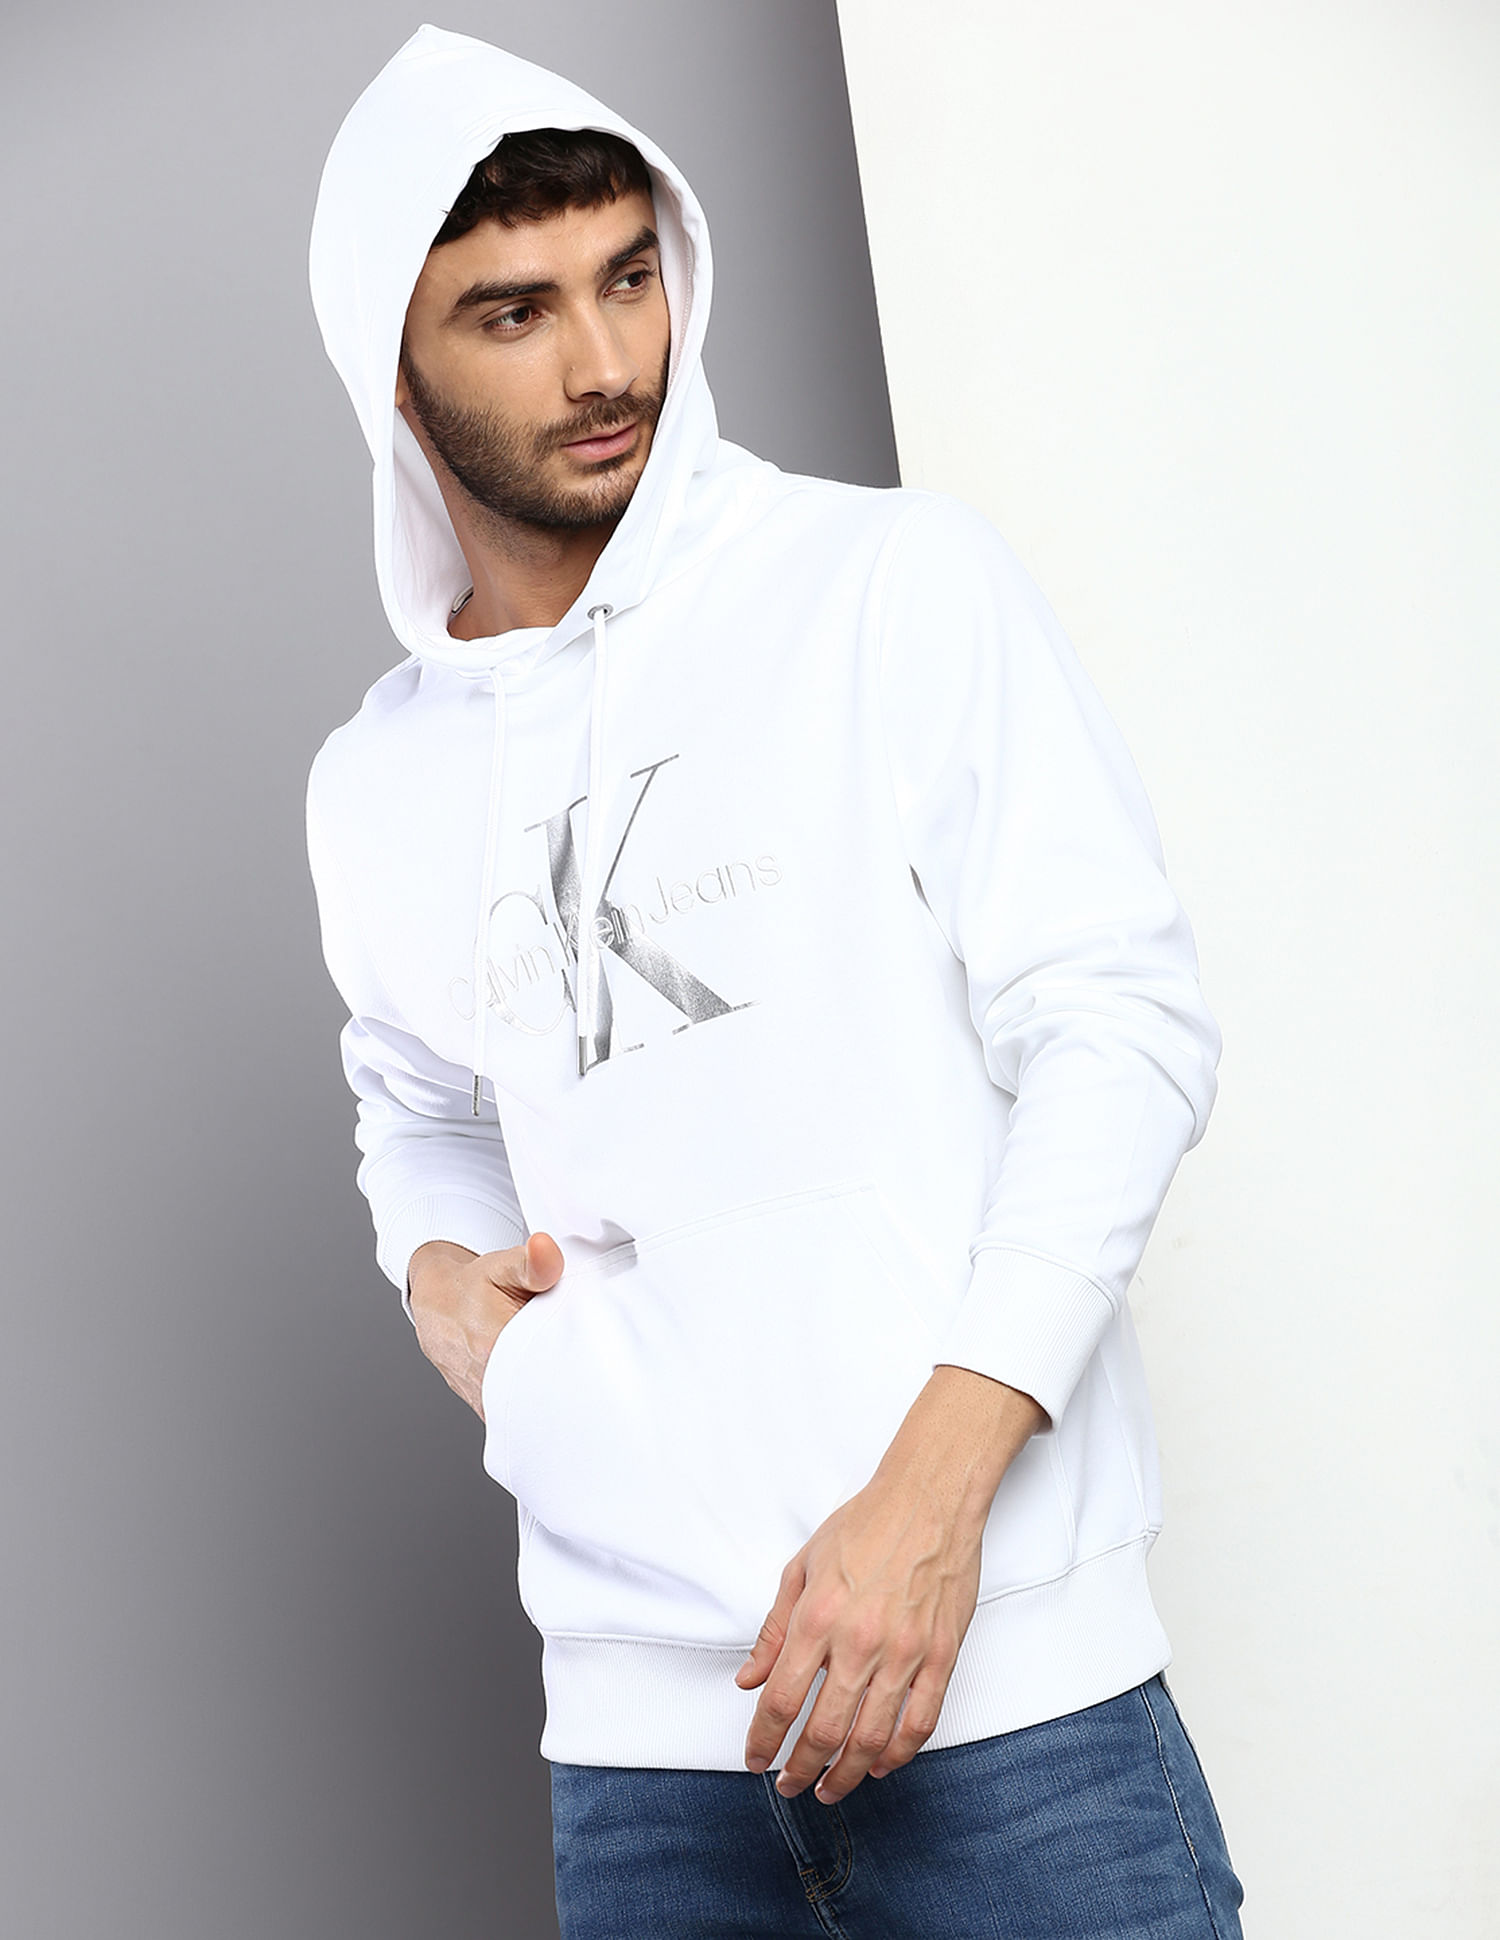 Buy Calvin Klein Jeans Mock Neck Jacquard Sweatshirt - NNNOW.com